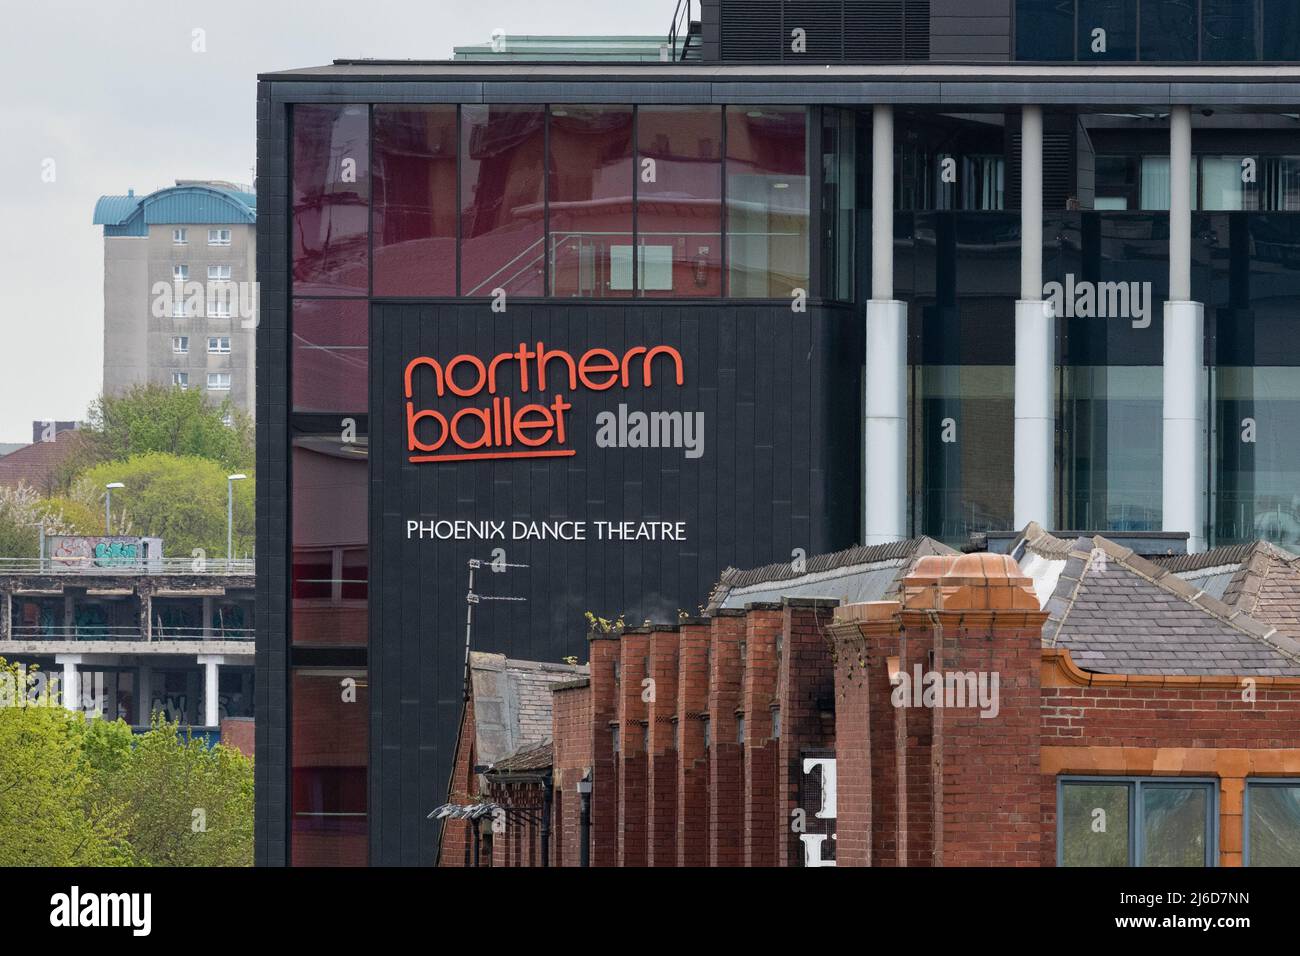 Northern Ballet and phoenix dance theatre, Leeds, West Yorkshire, England, UK Stock Photo